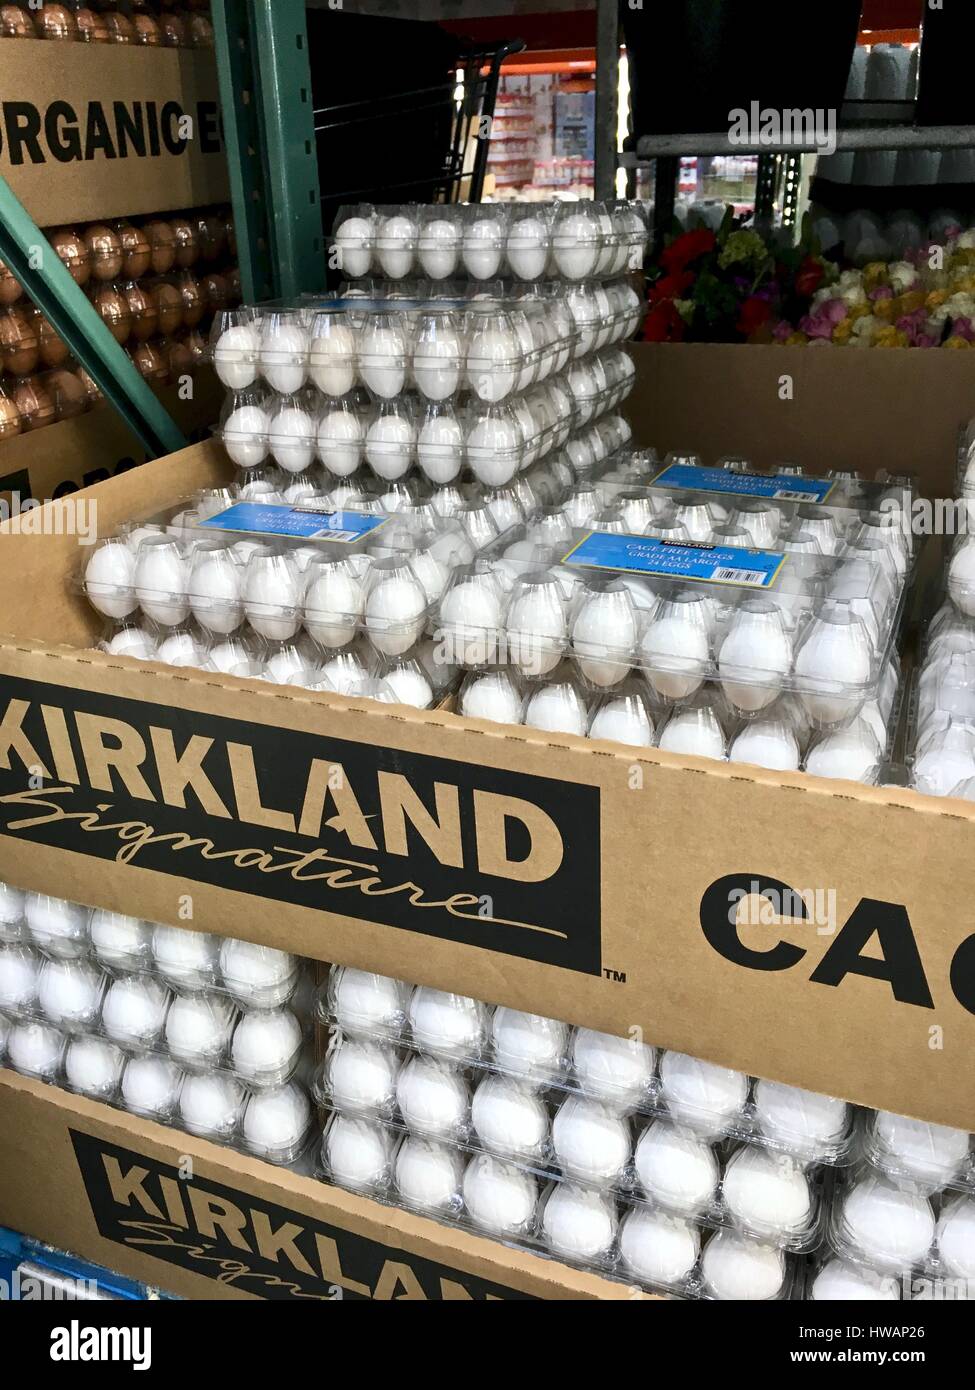 Kirkland eggs at Costco warehouse Stock Photo